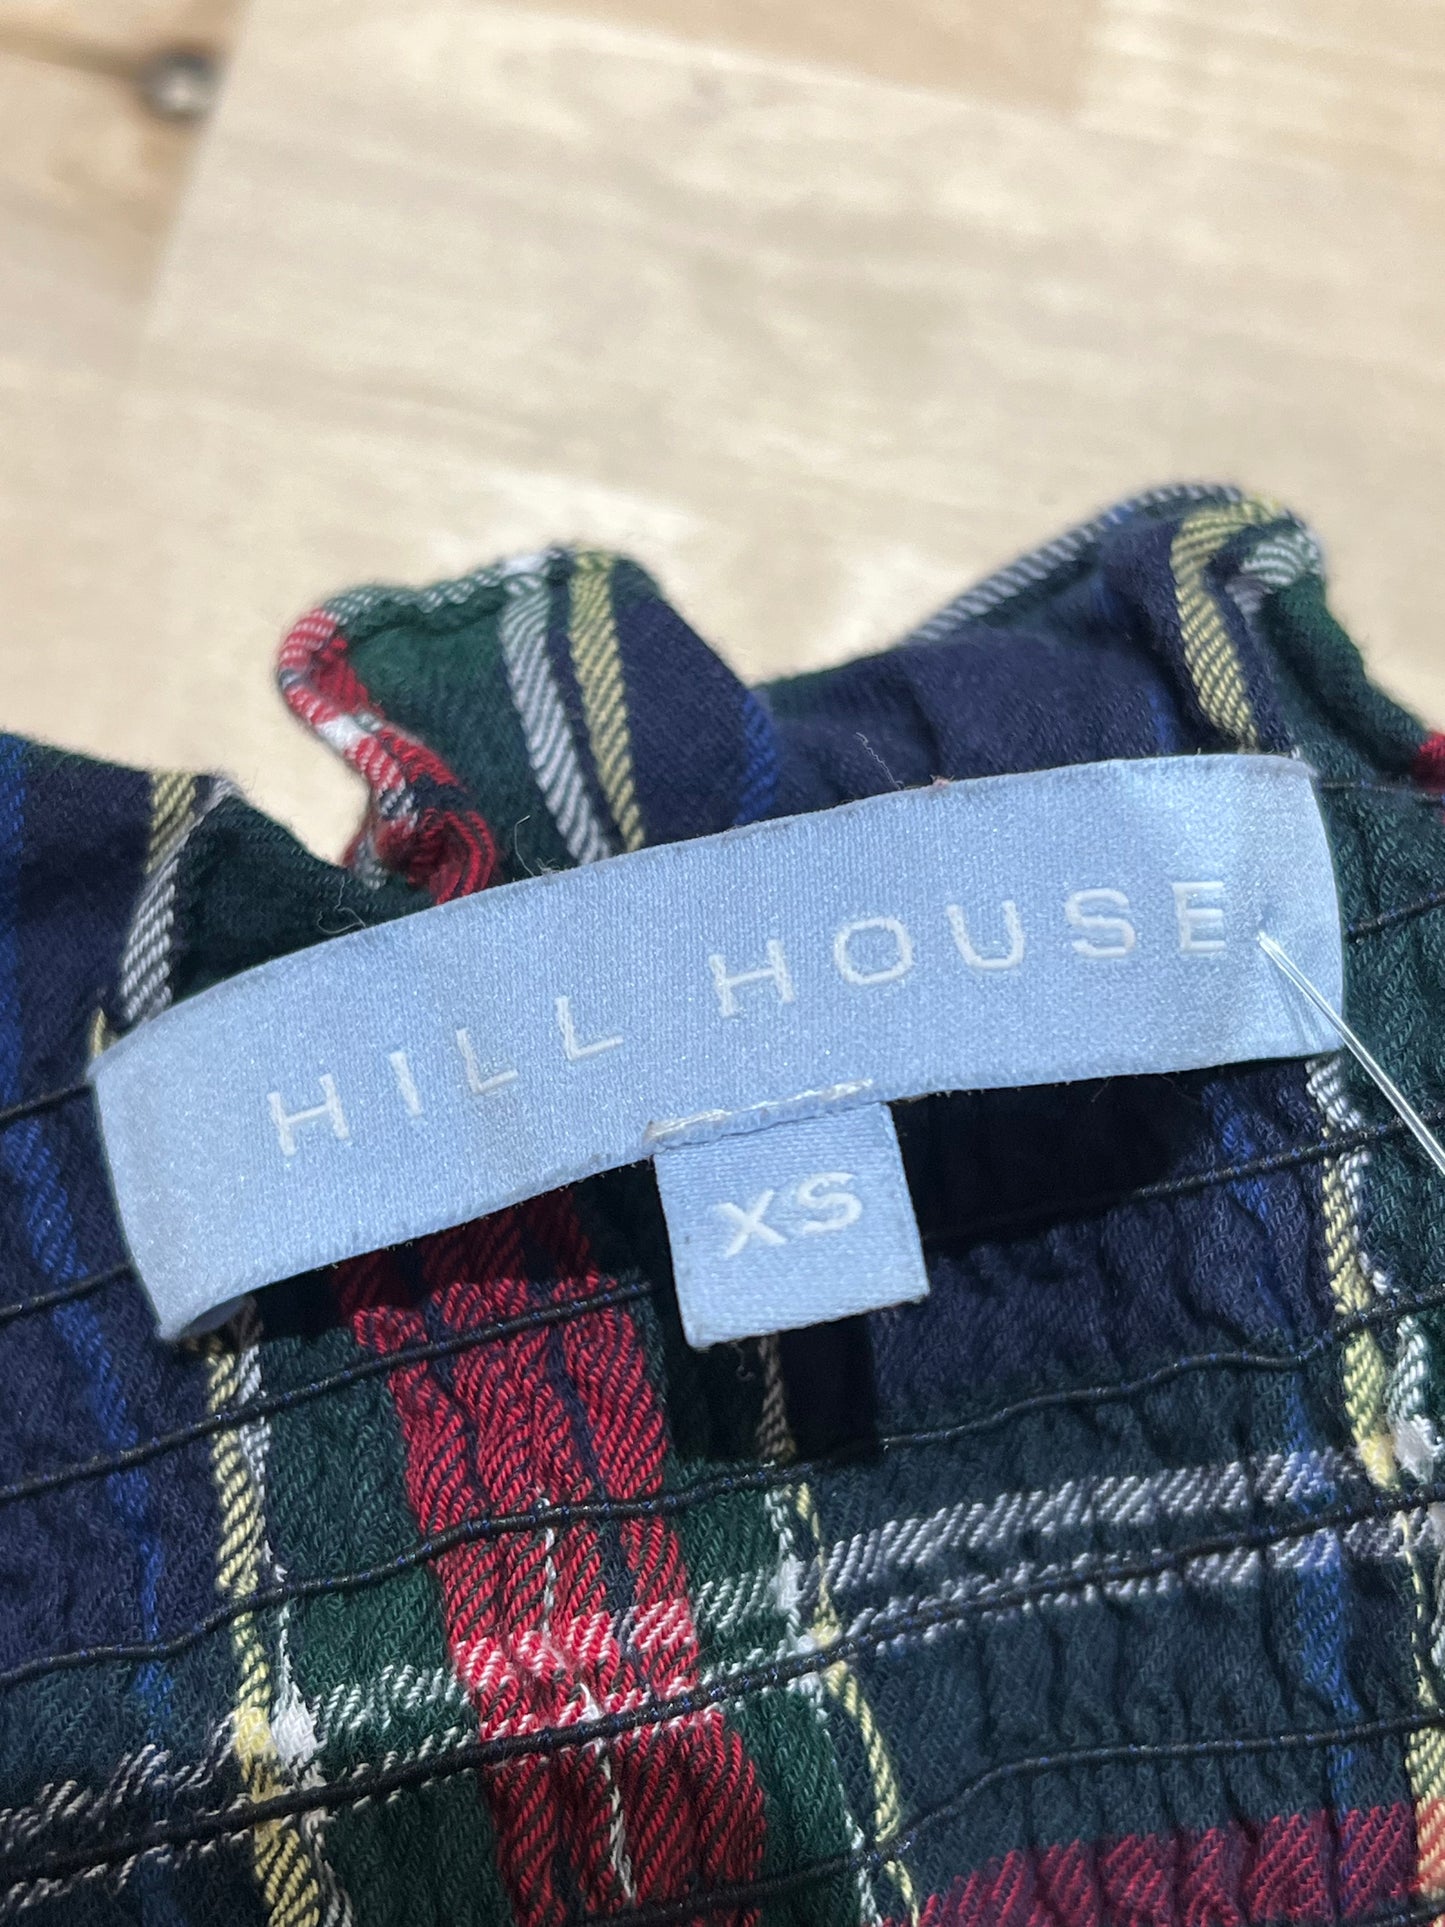 Hill House Ellie Nap Dress in "Iris Tartan" Size XS